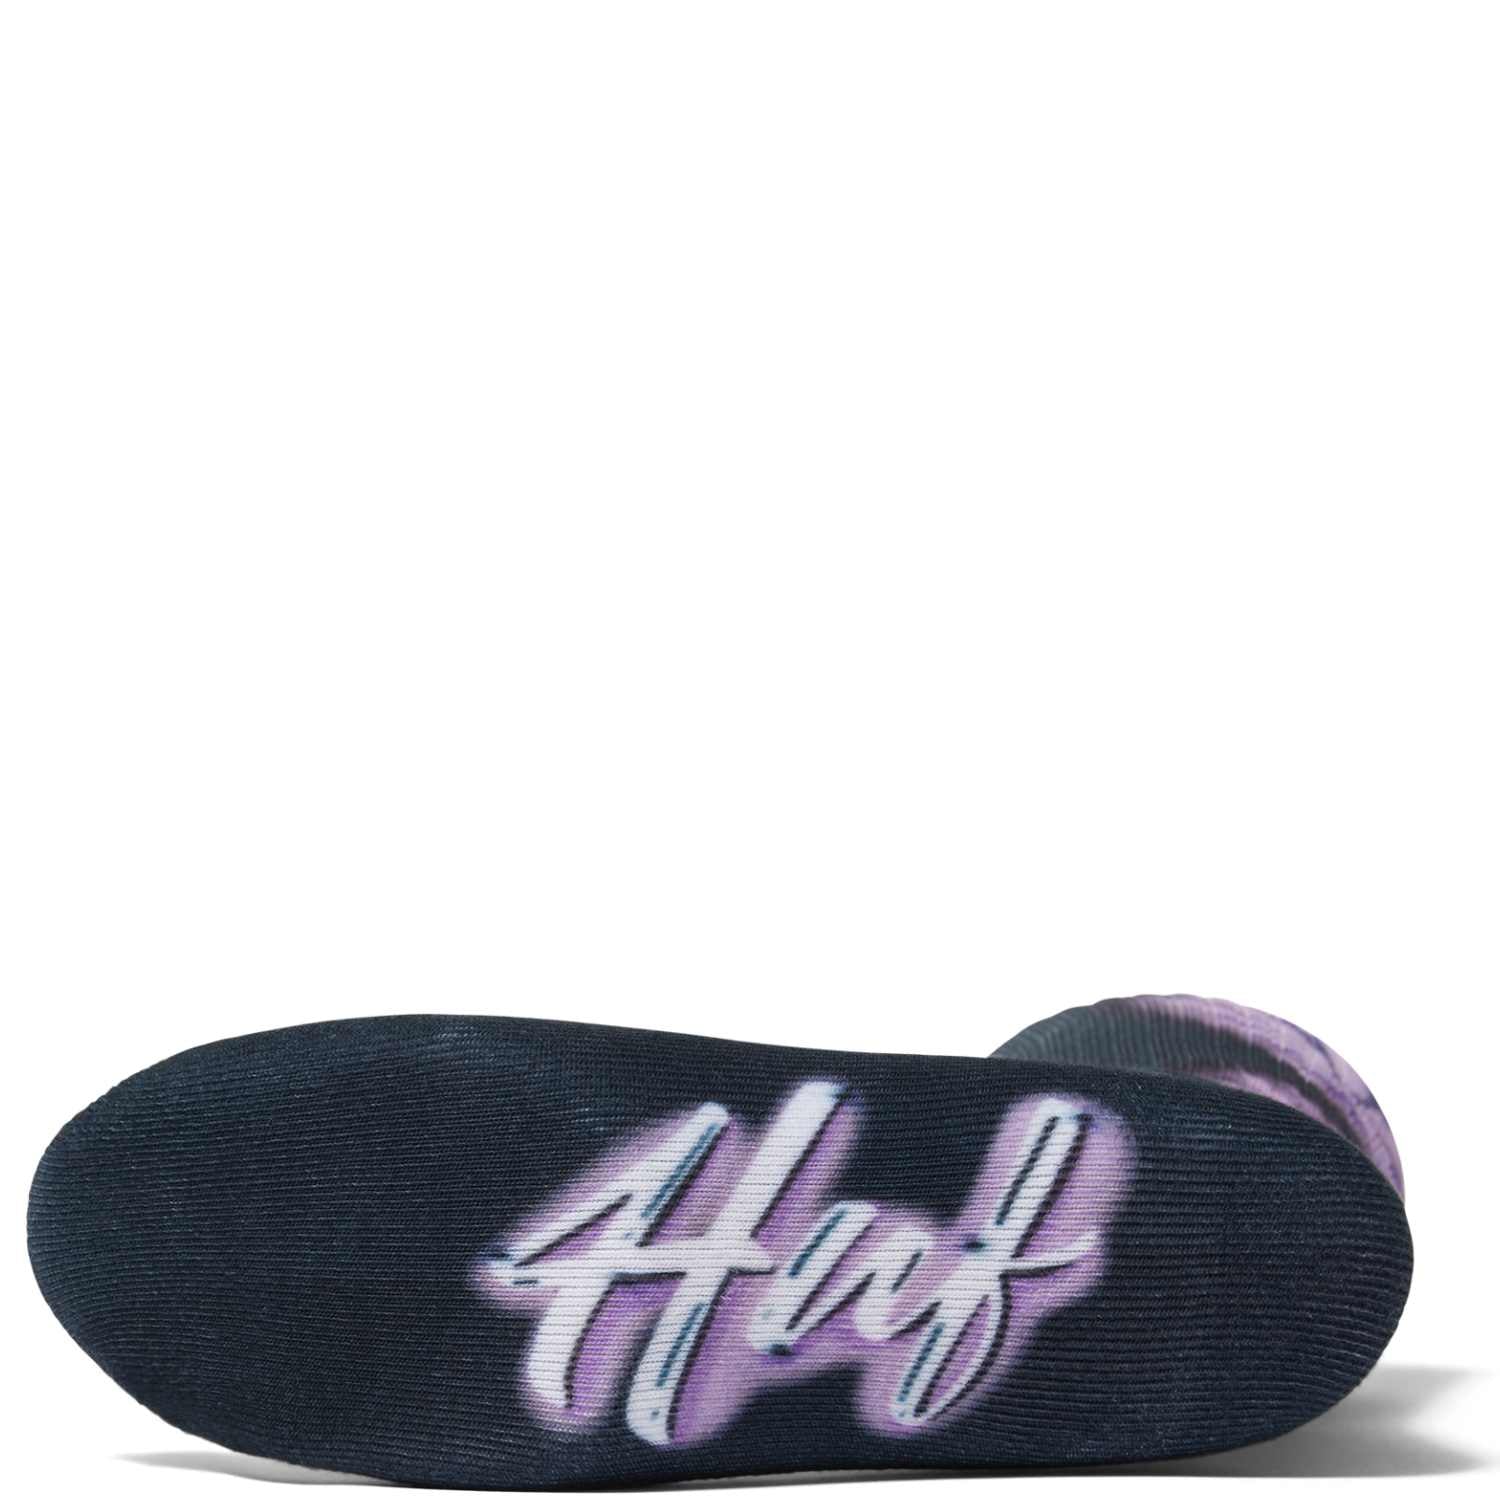 HUF - Airbrush Digital PL Sock - Black  